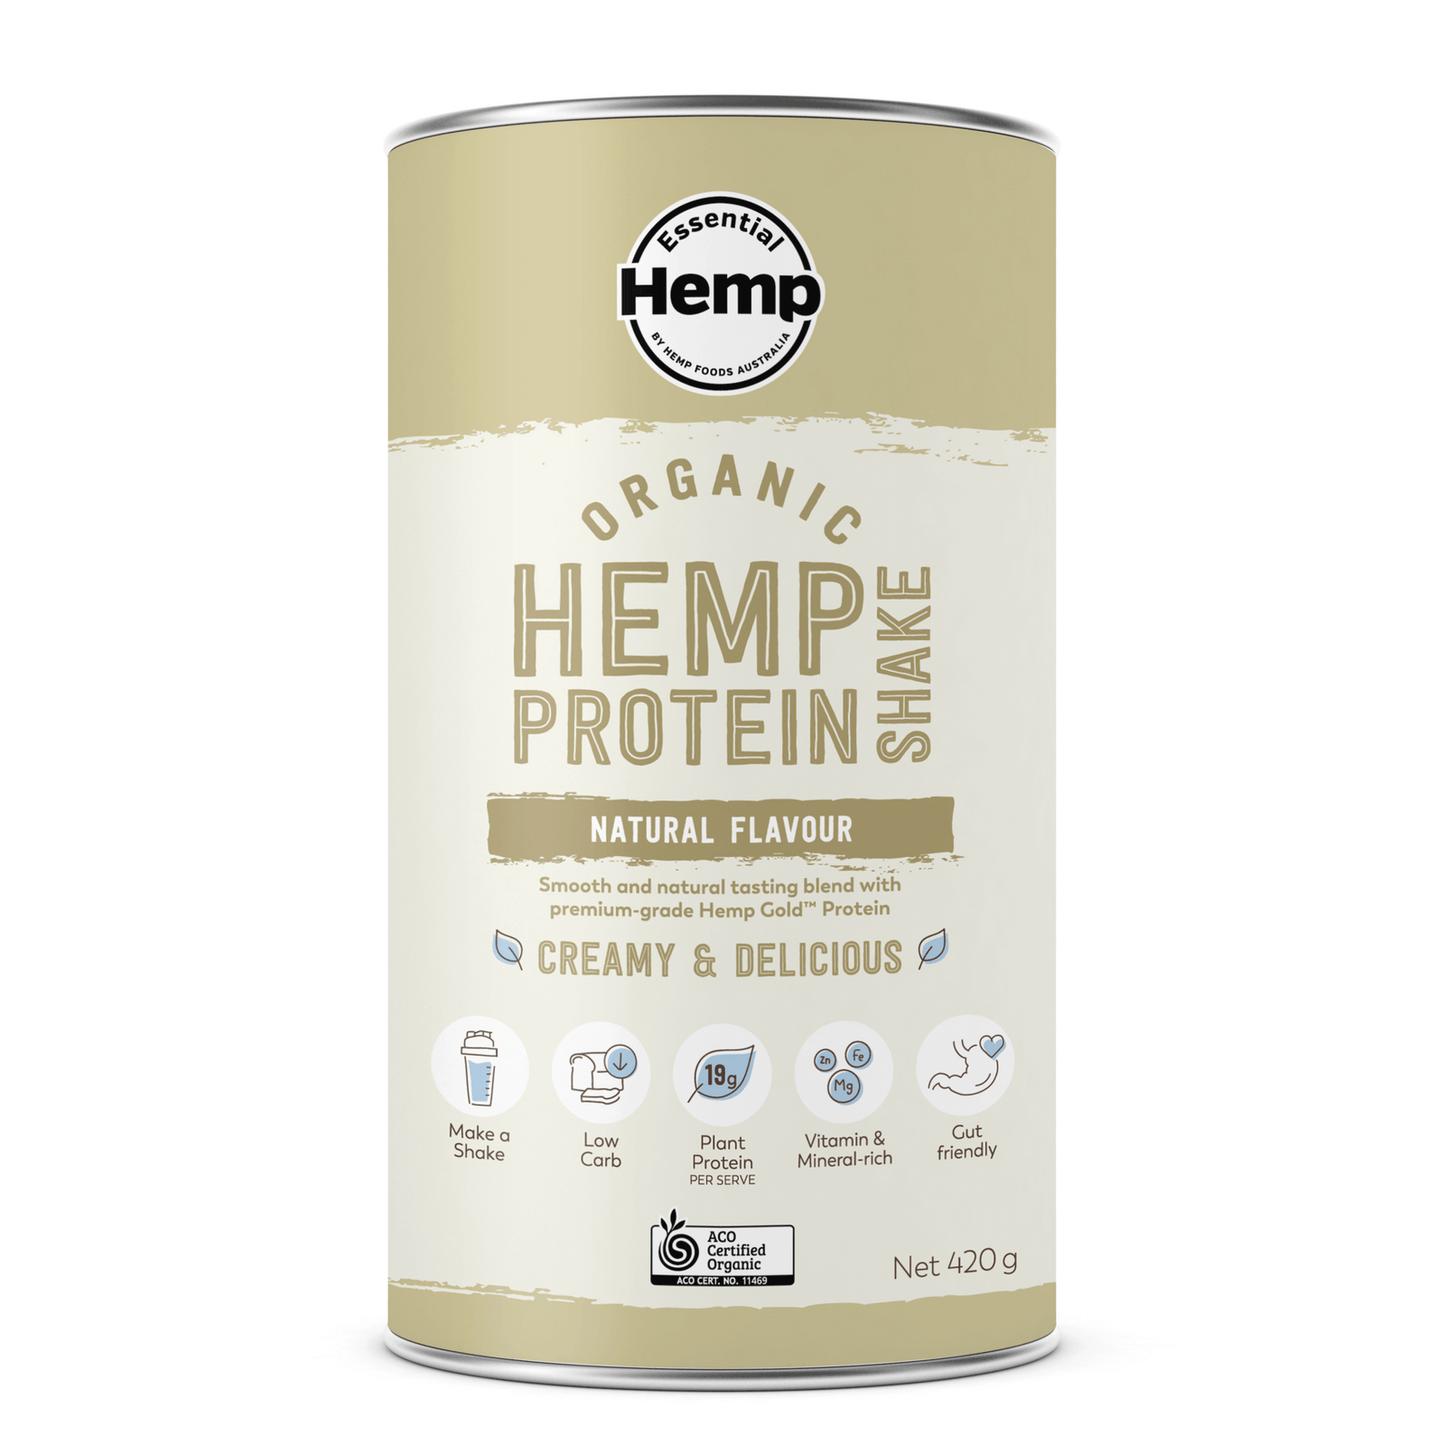 Hemp Foods Australia Organic Hemp Protein 35g Or 420g, Natural Flavour